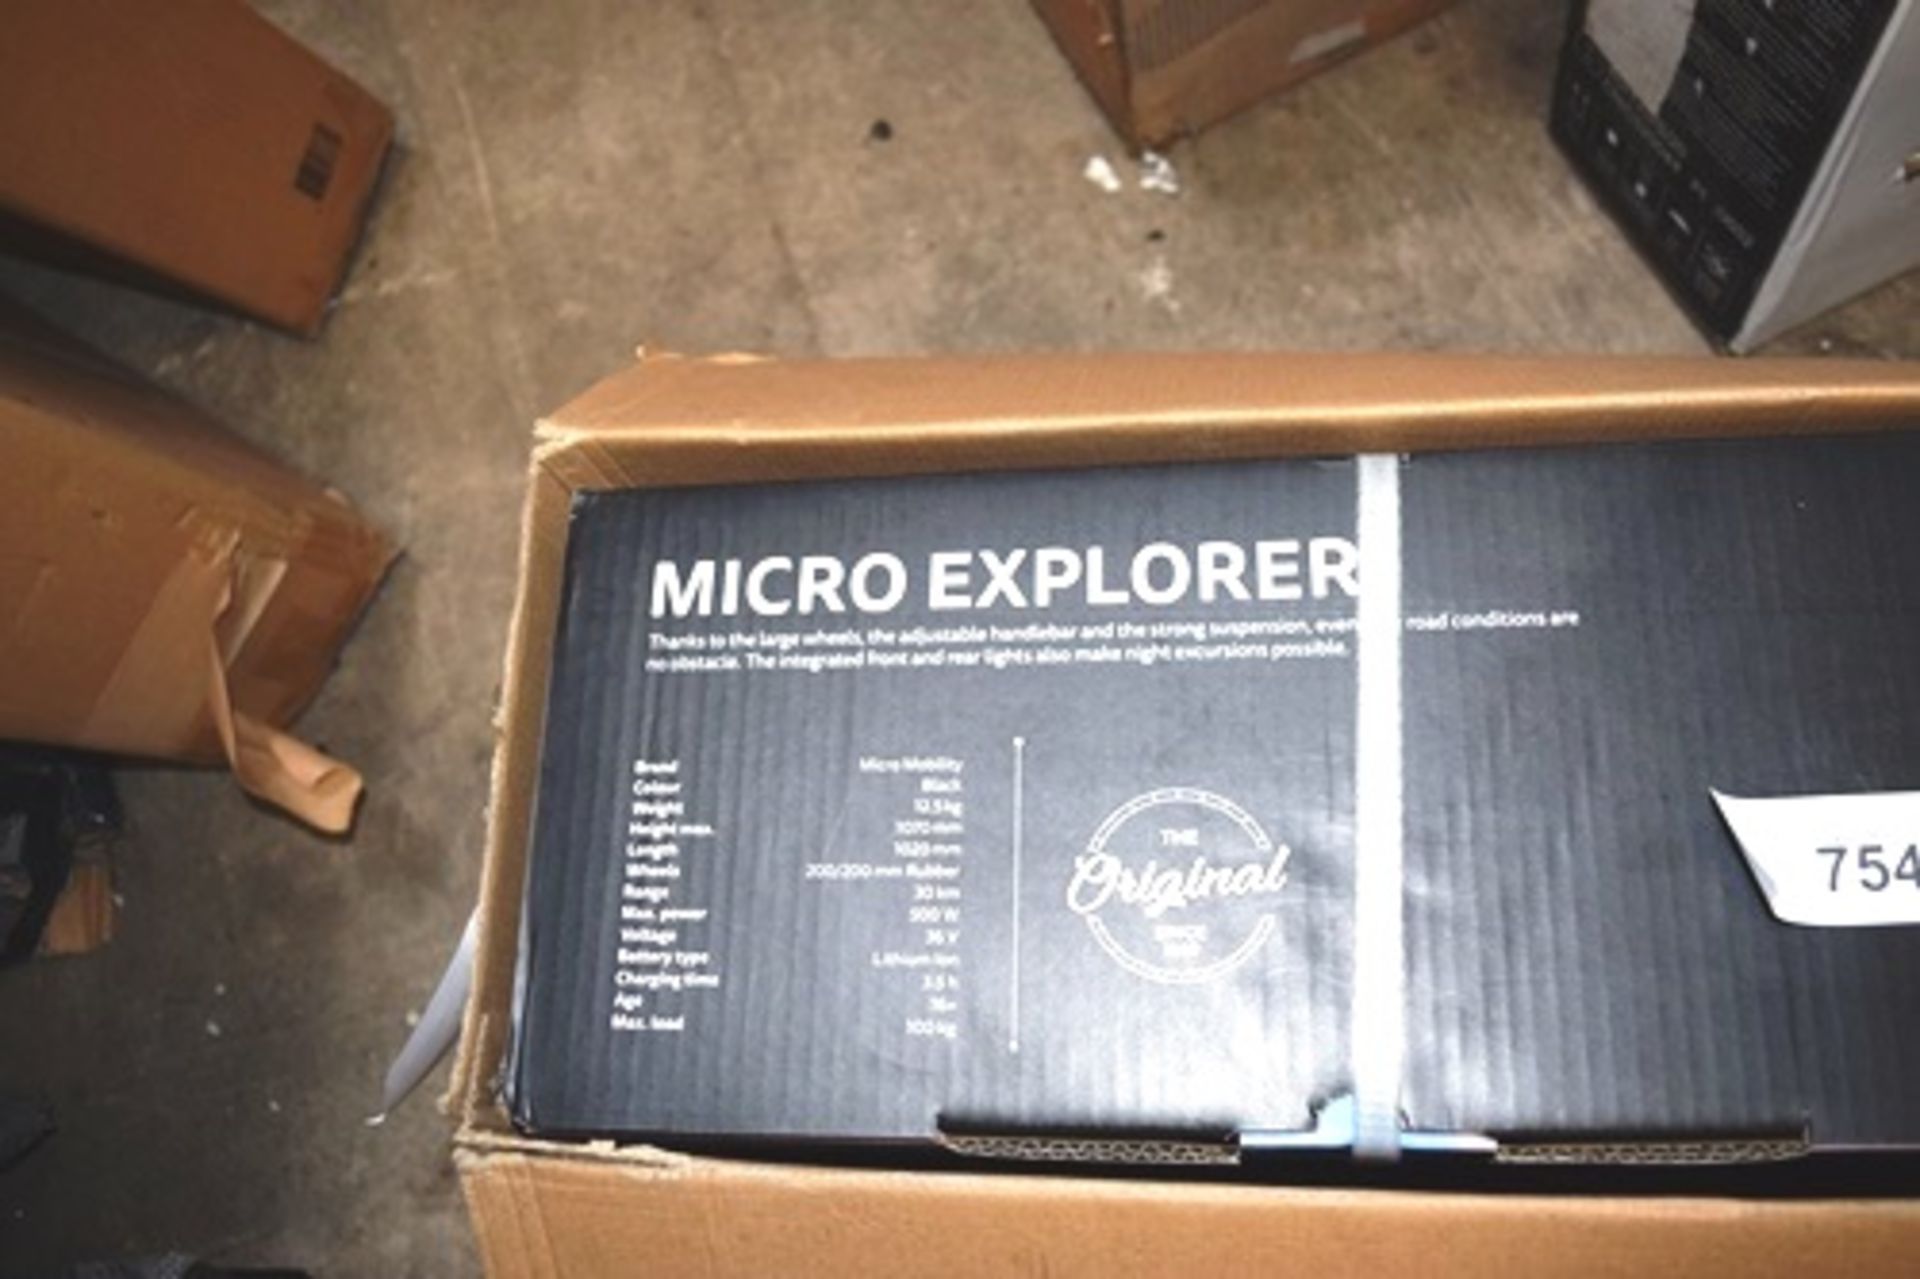 1 x black M-Cro micro explorer scooter, model EM0038, 36V - Sealed new in box (GS16) - Image 3 of 3